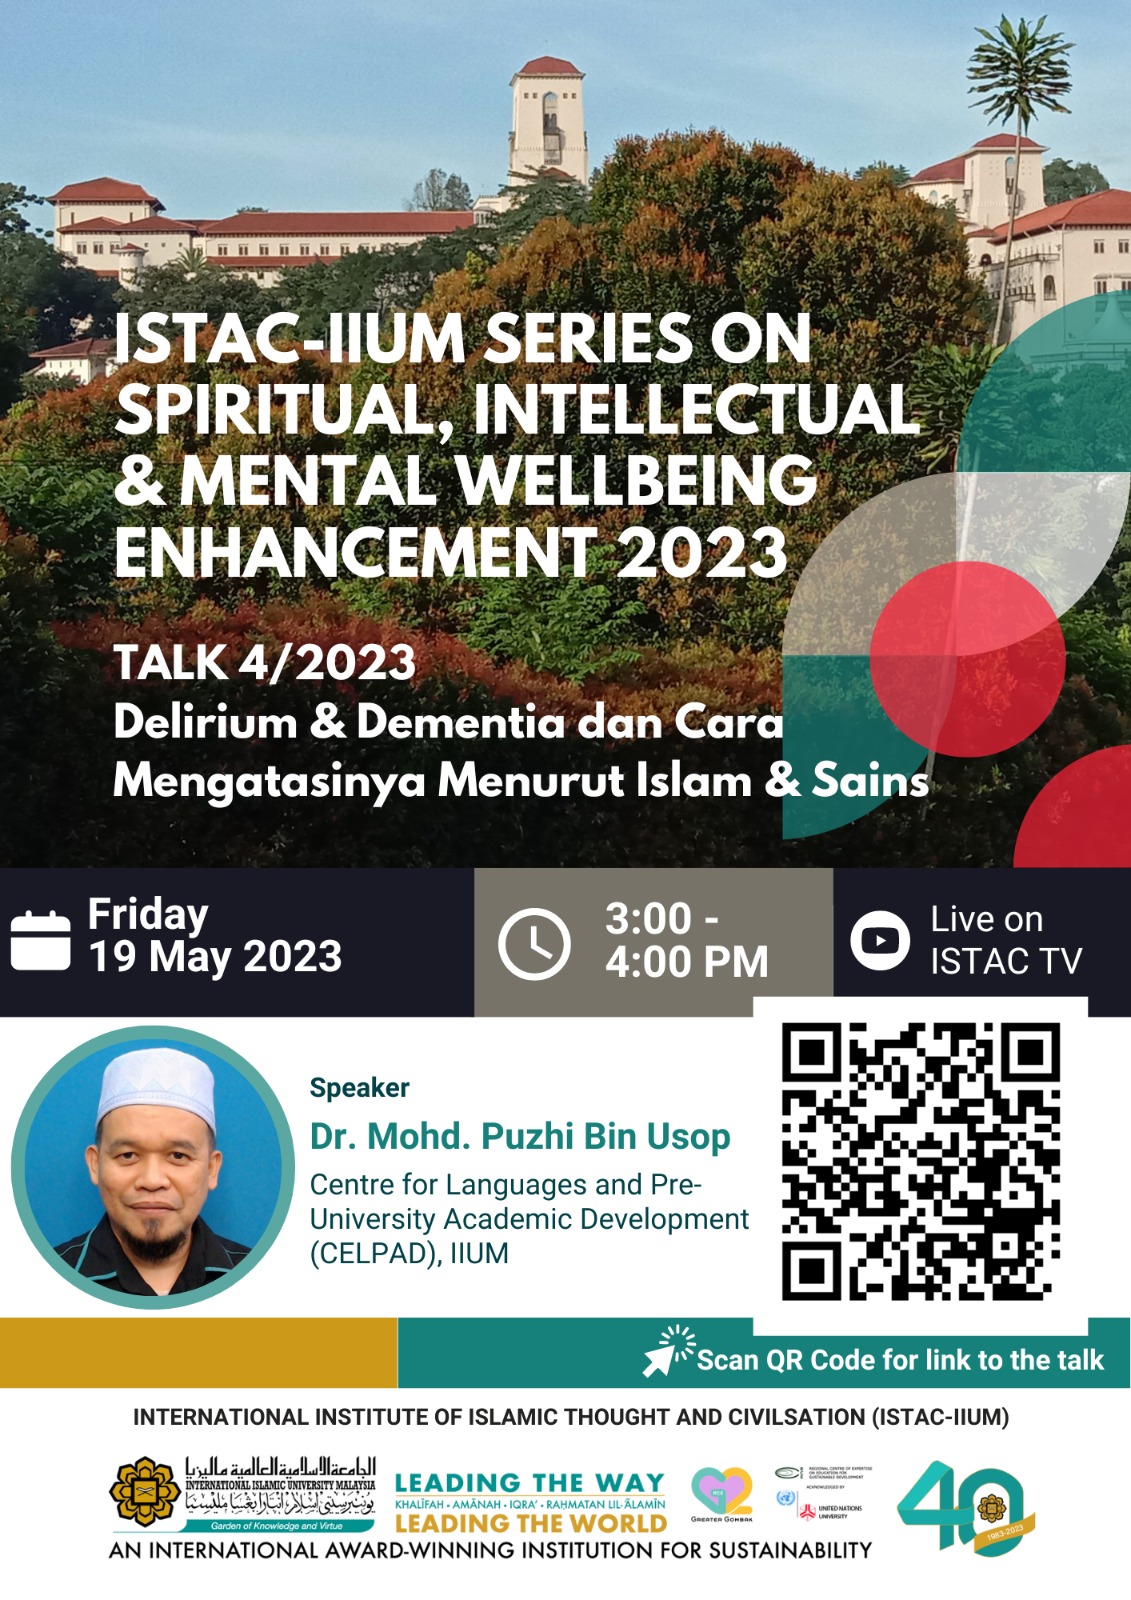 ISTAC-IIUM SERIES ON SPIRITUAL, INTELLECTUAL & MENTAL WELLBEING ENHANCEMENT 2023 - TALK 4/2023